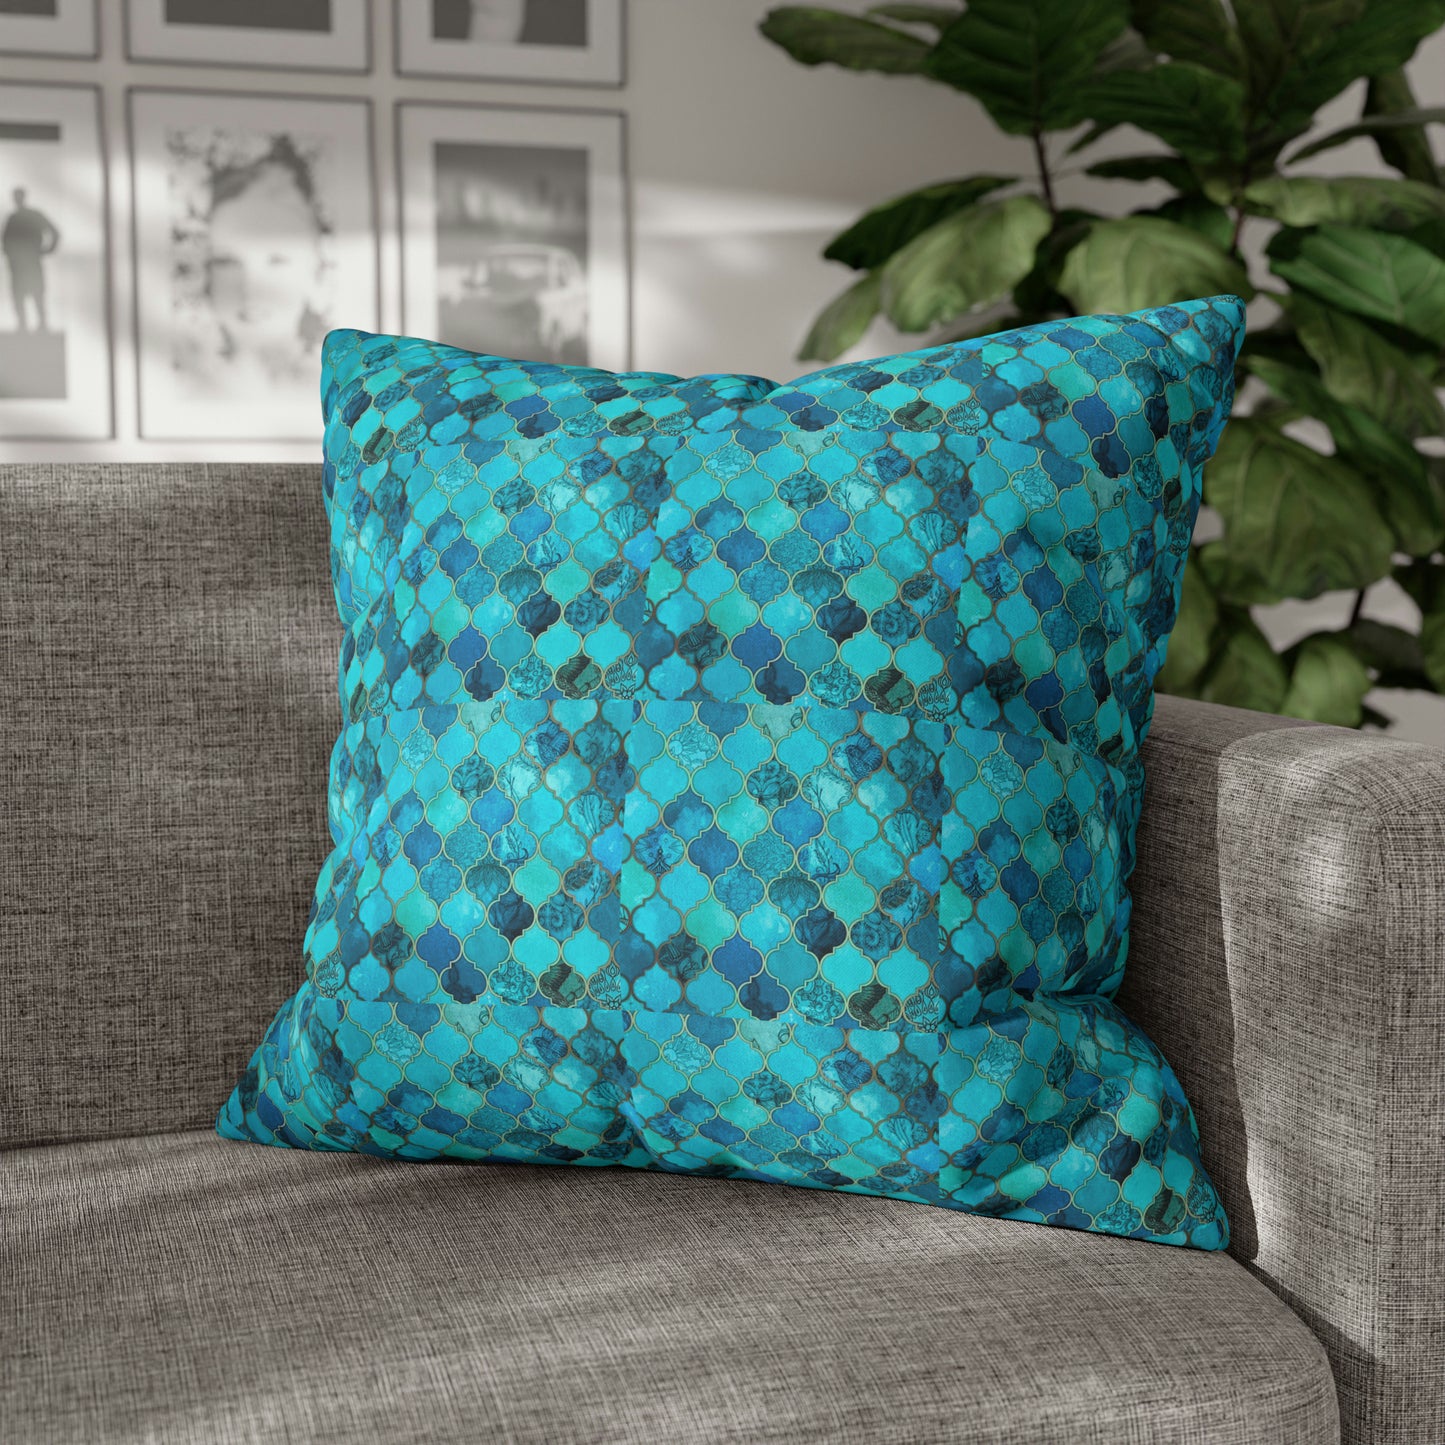 Teal and Turquoise Arabesque Tile Marrakech Moroccan Spun Polyester Pillow Cover